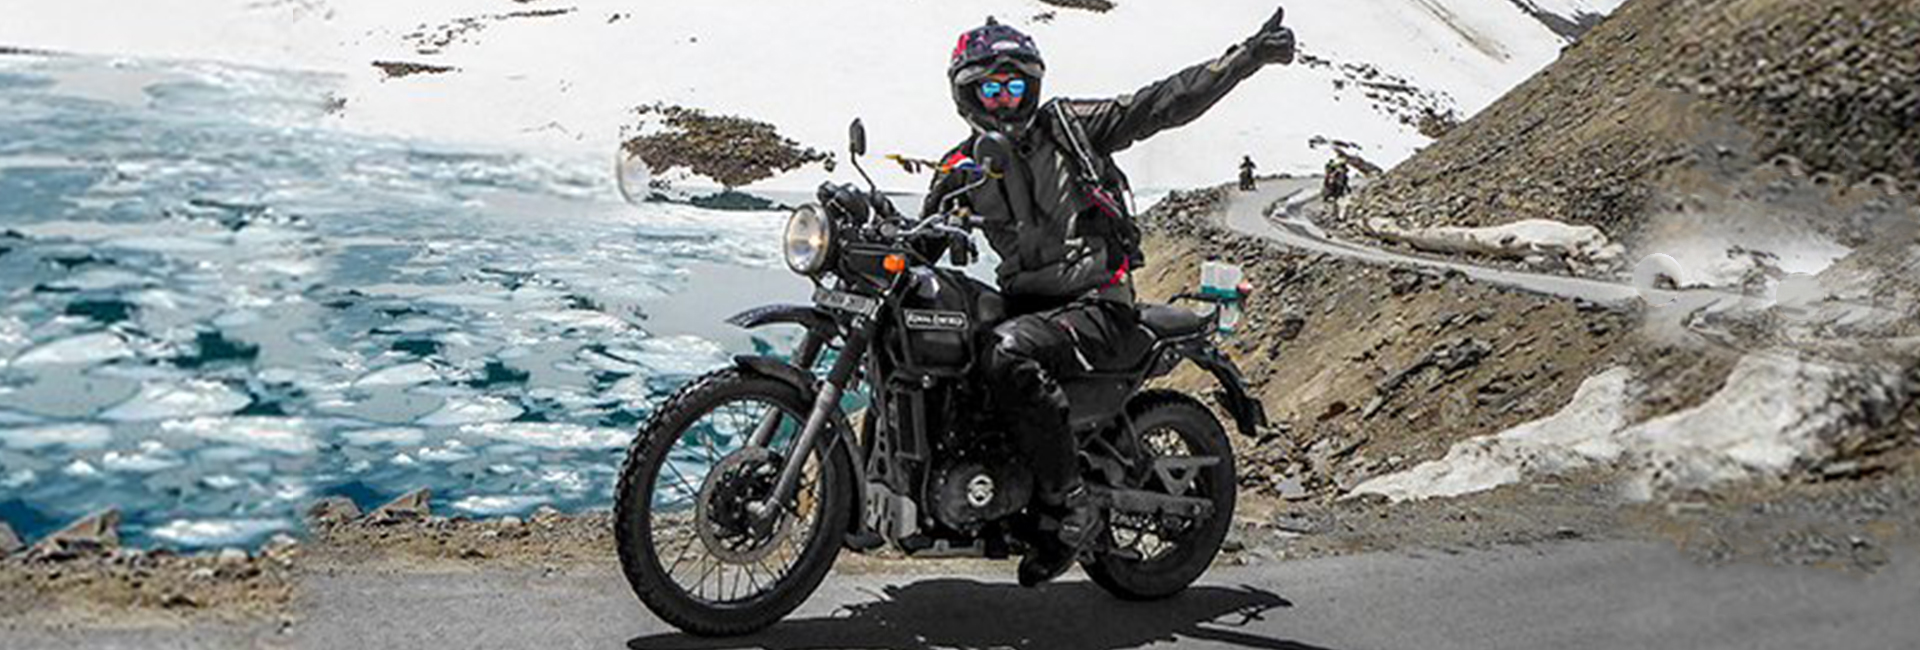 Ultimate India Motorbike Trip| 8,000km in 43 Days